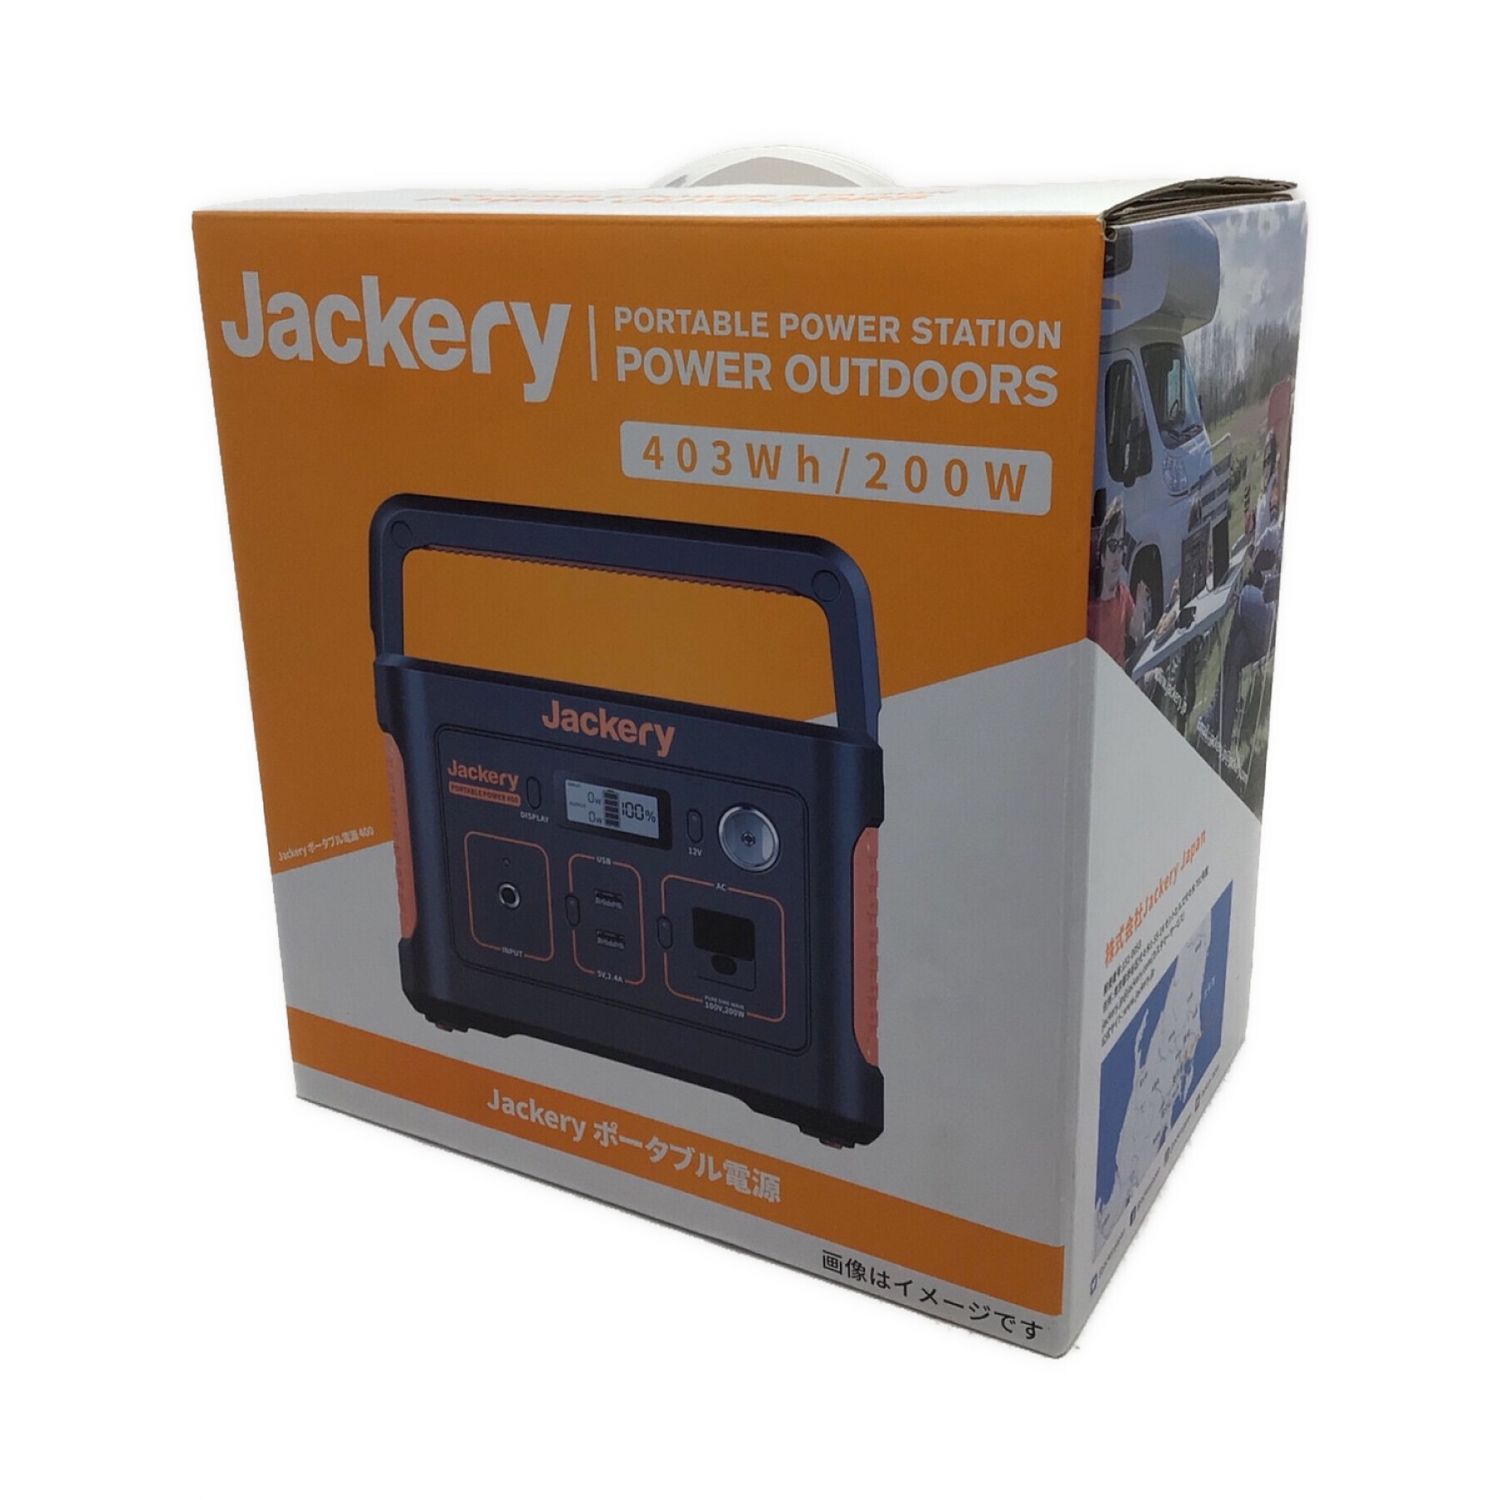 Jackery ジャクリ ポータブル電源 400 - 防災関連グッズ